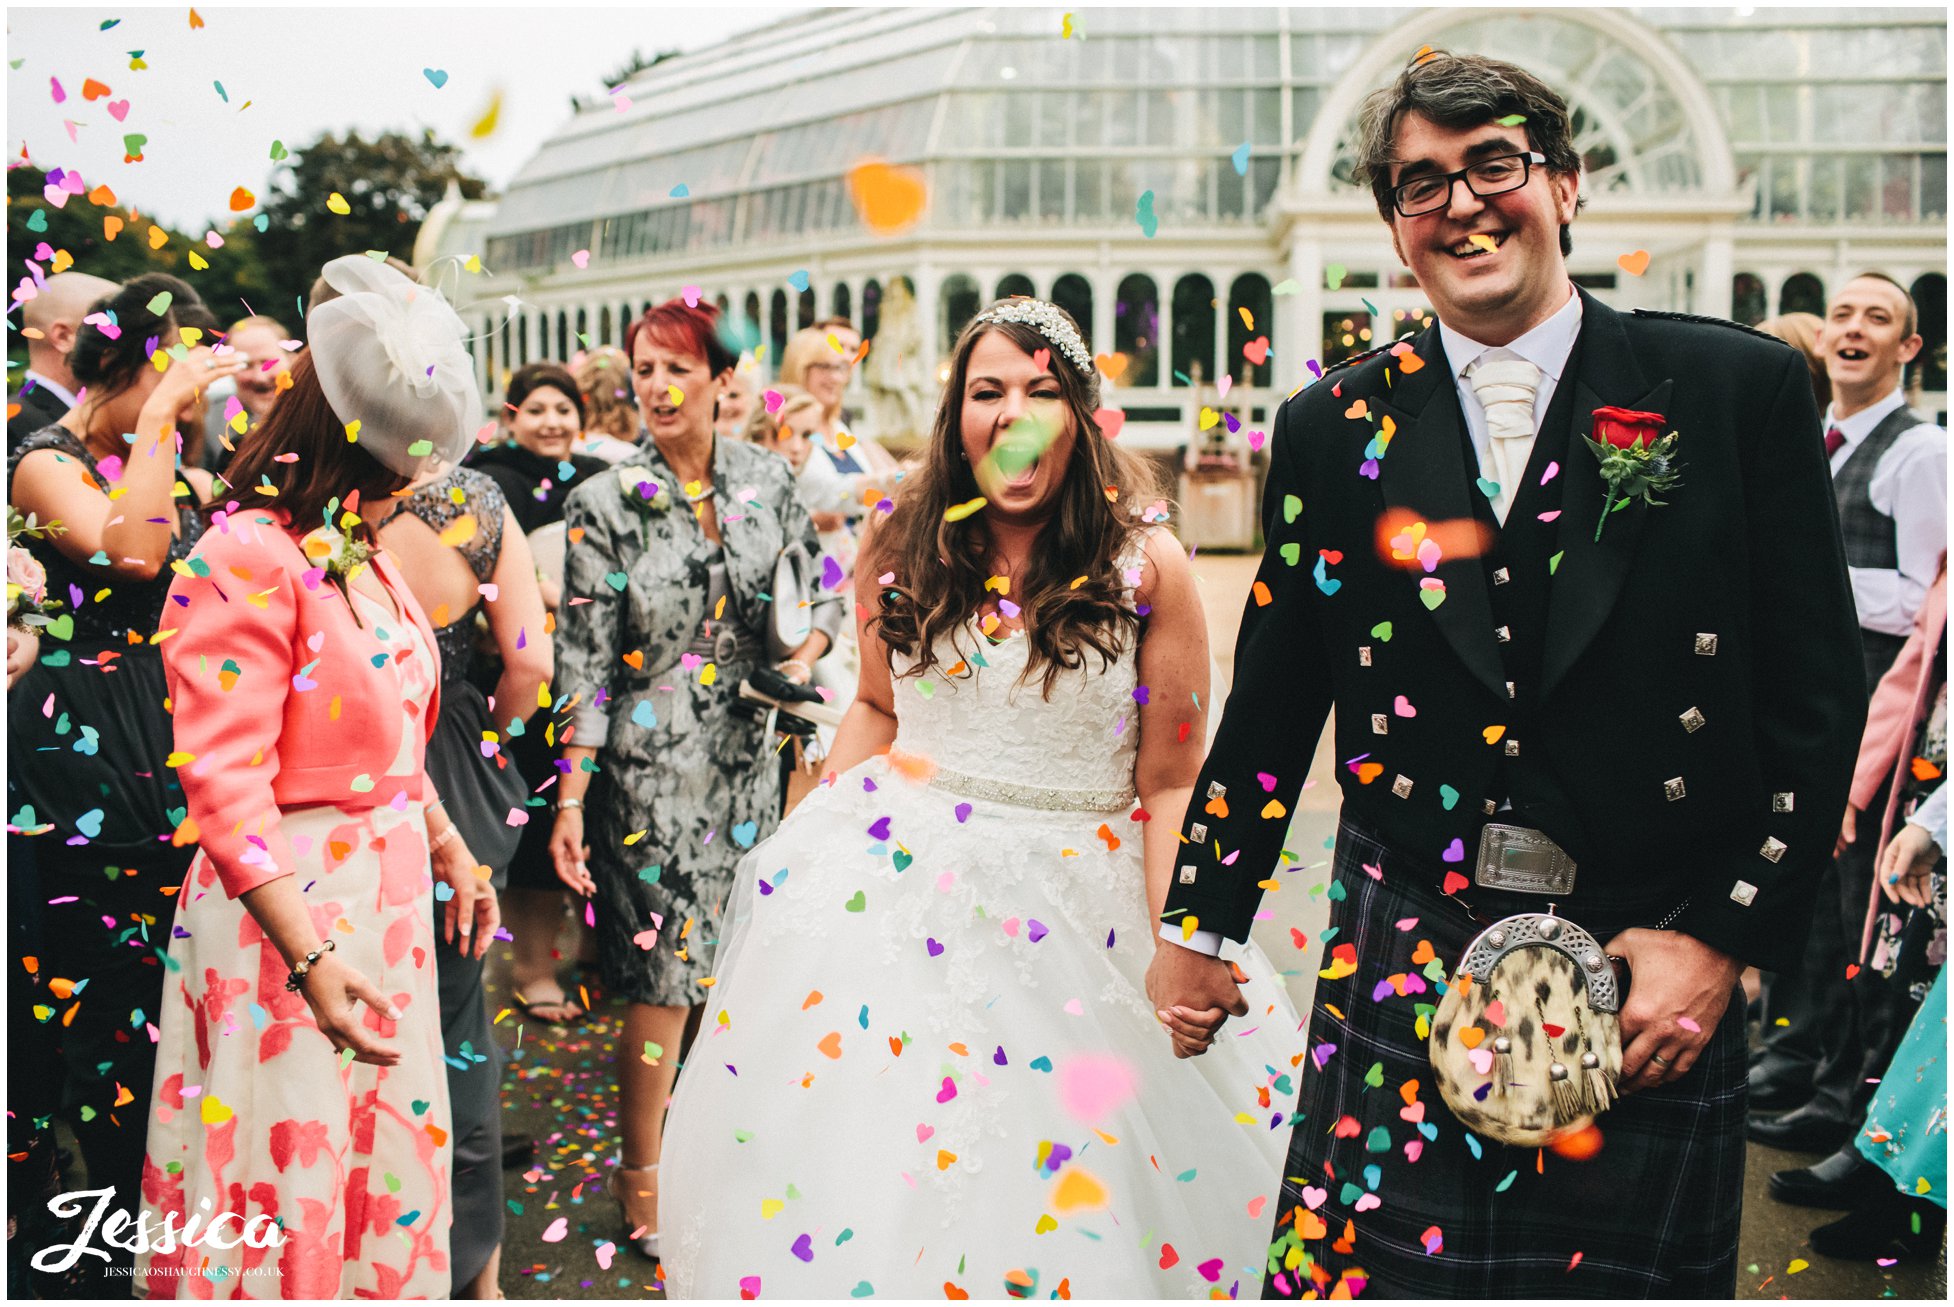 colourful confetti thrown over couple